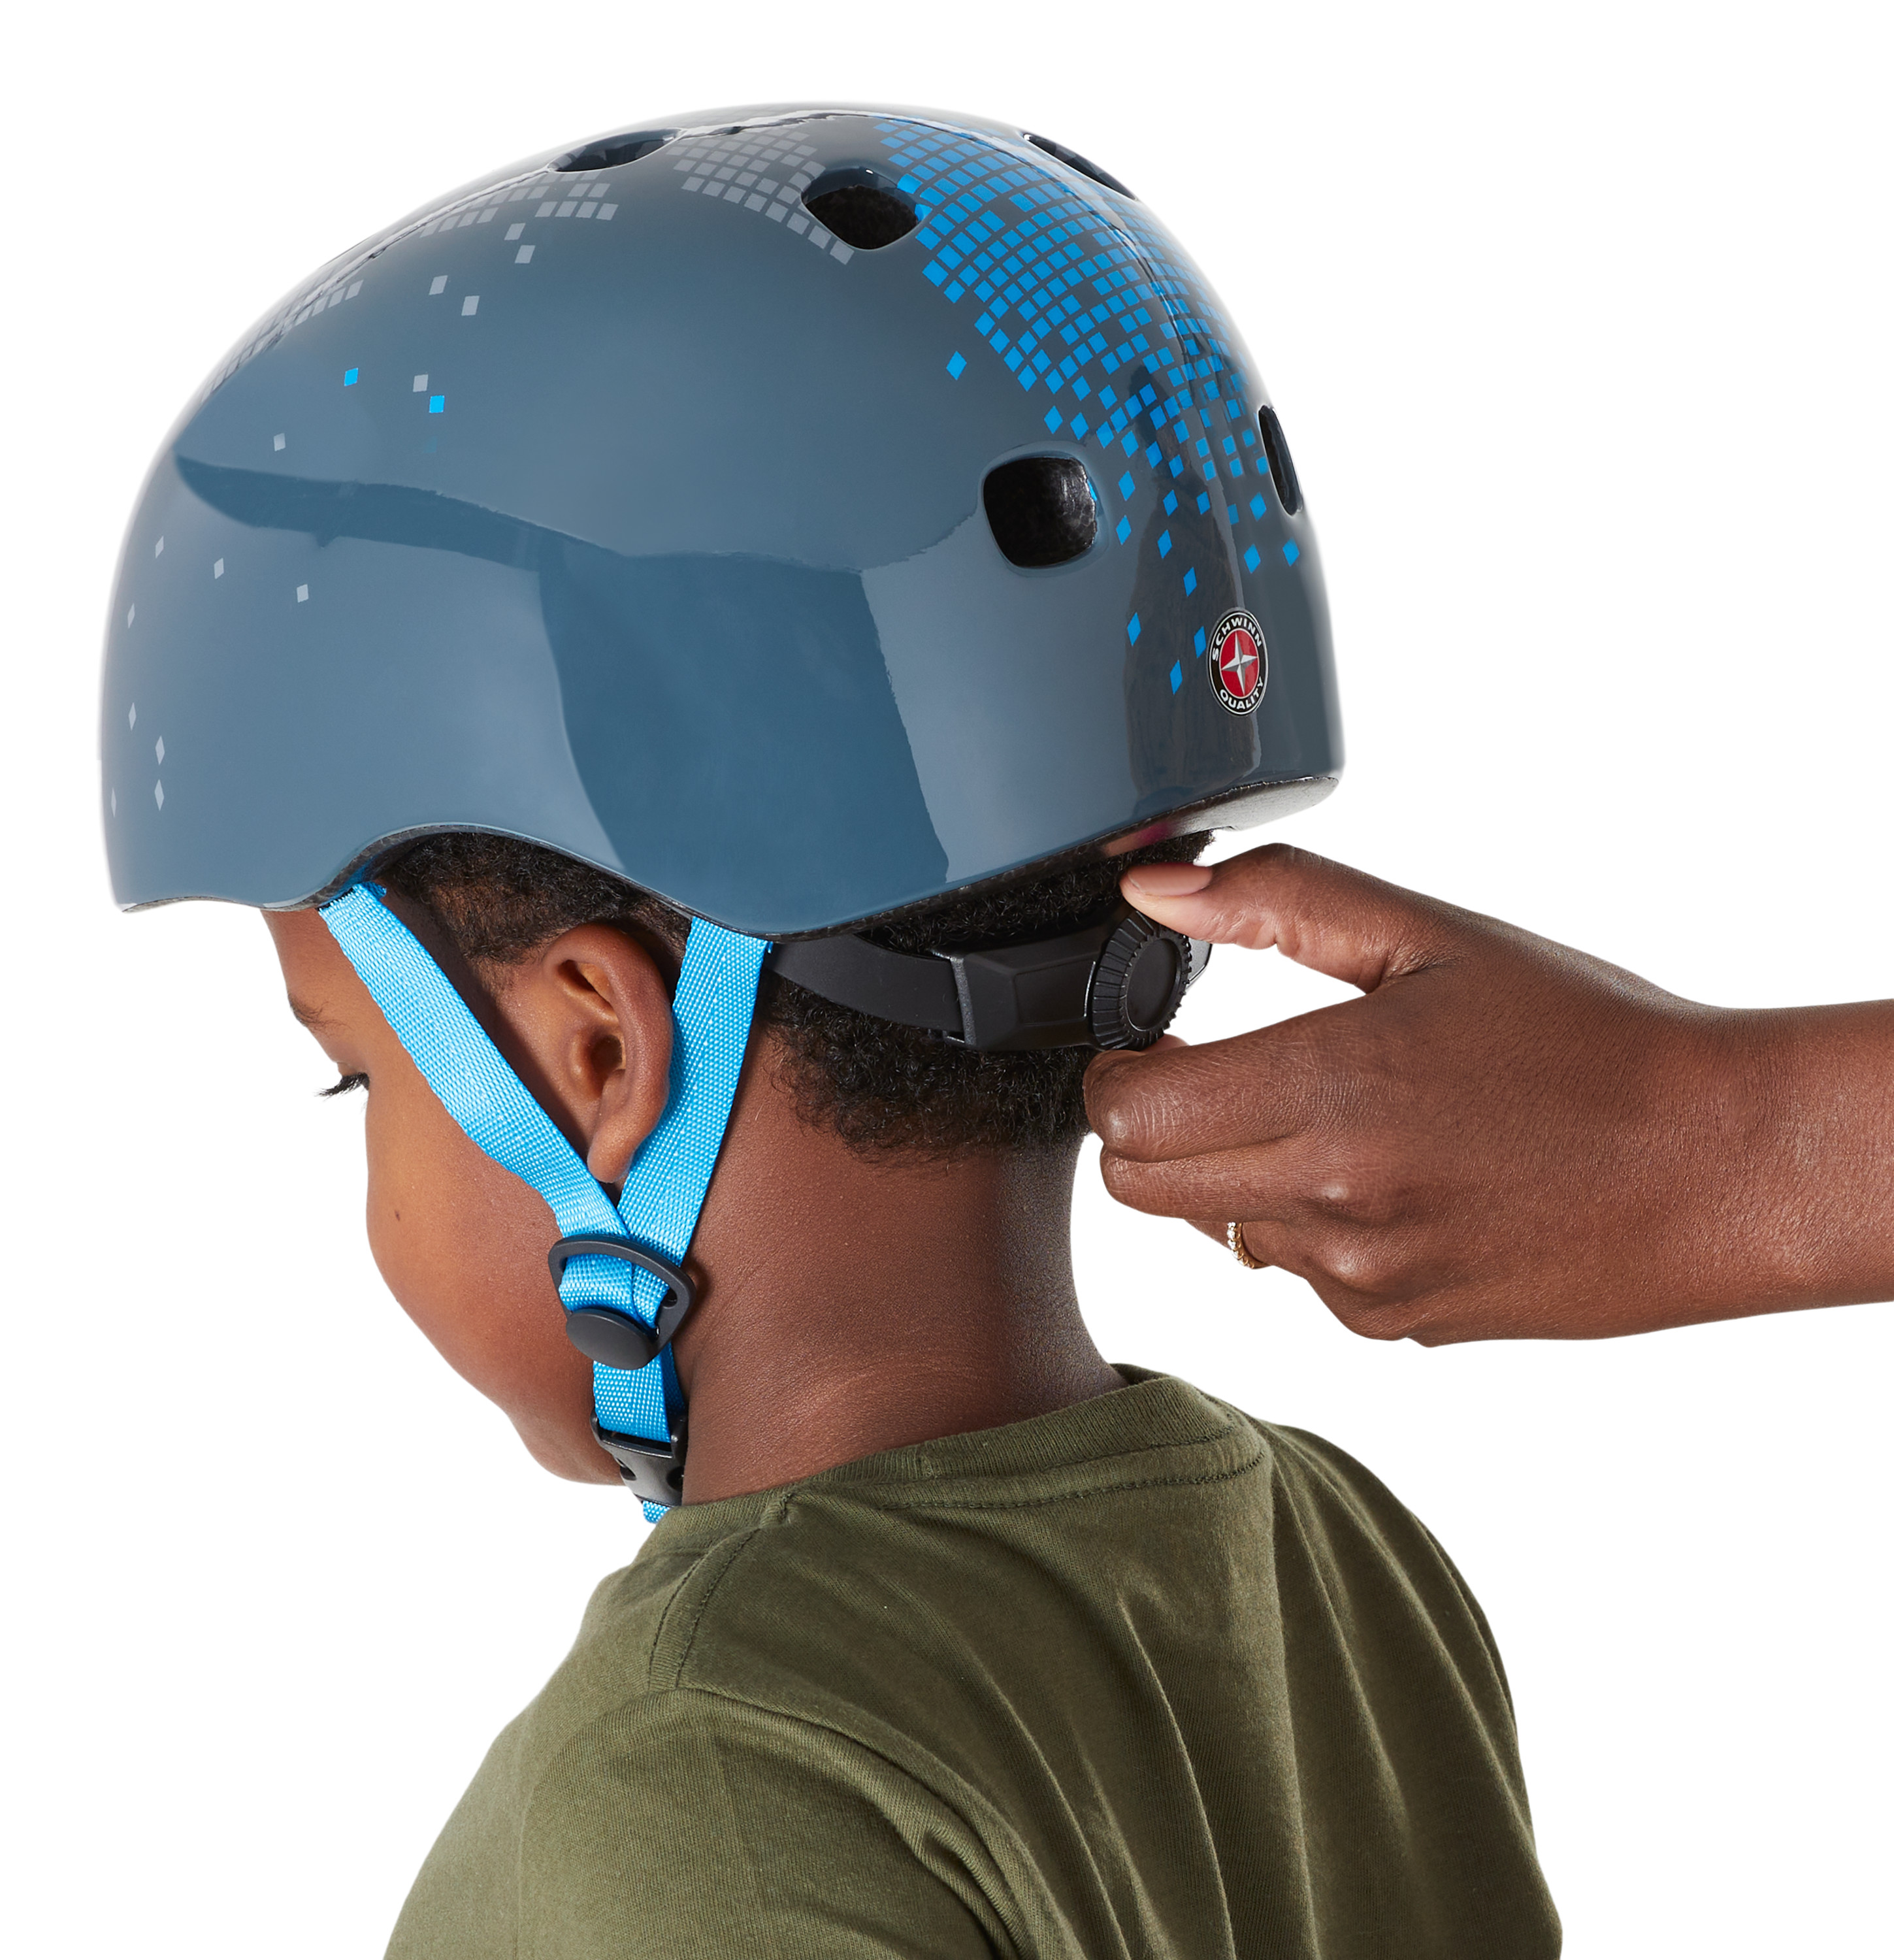 Schwinn Burst Youth Multisport Helmet, Grey - image 5 of 8